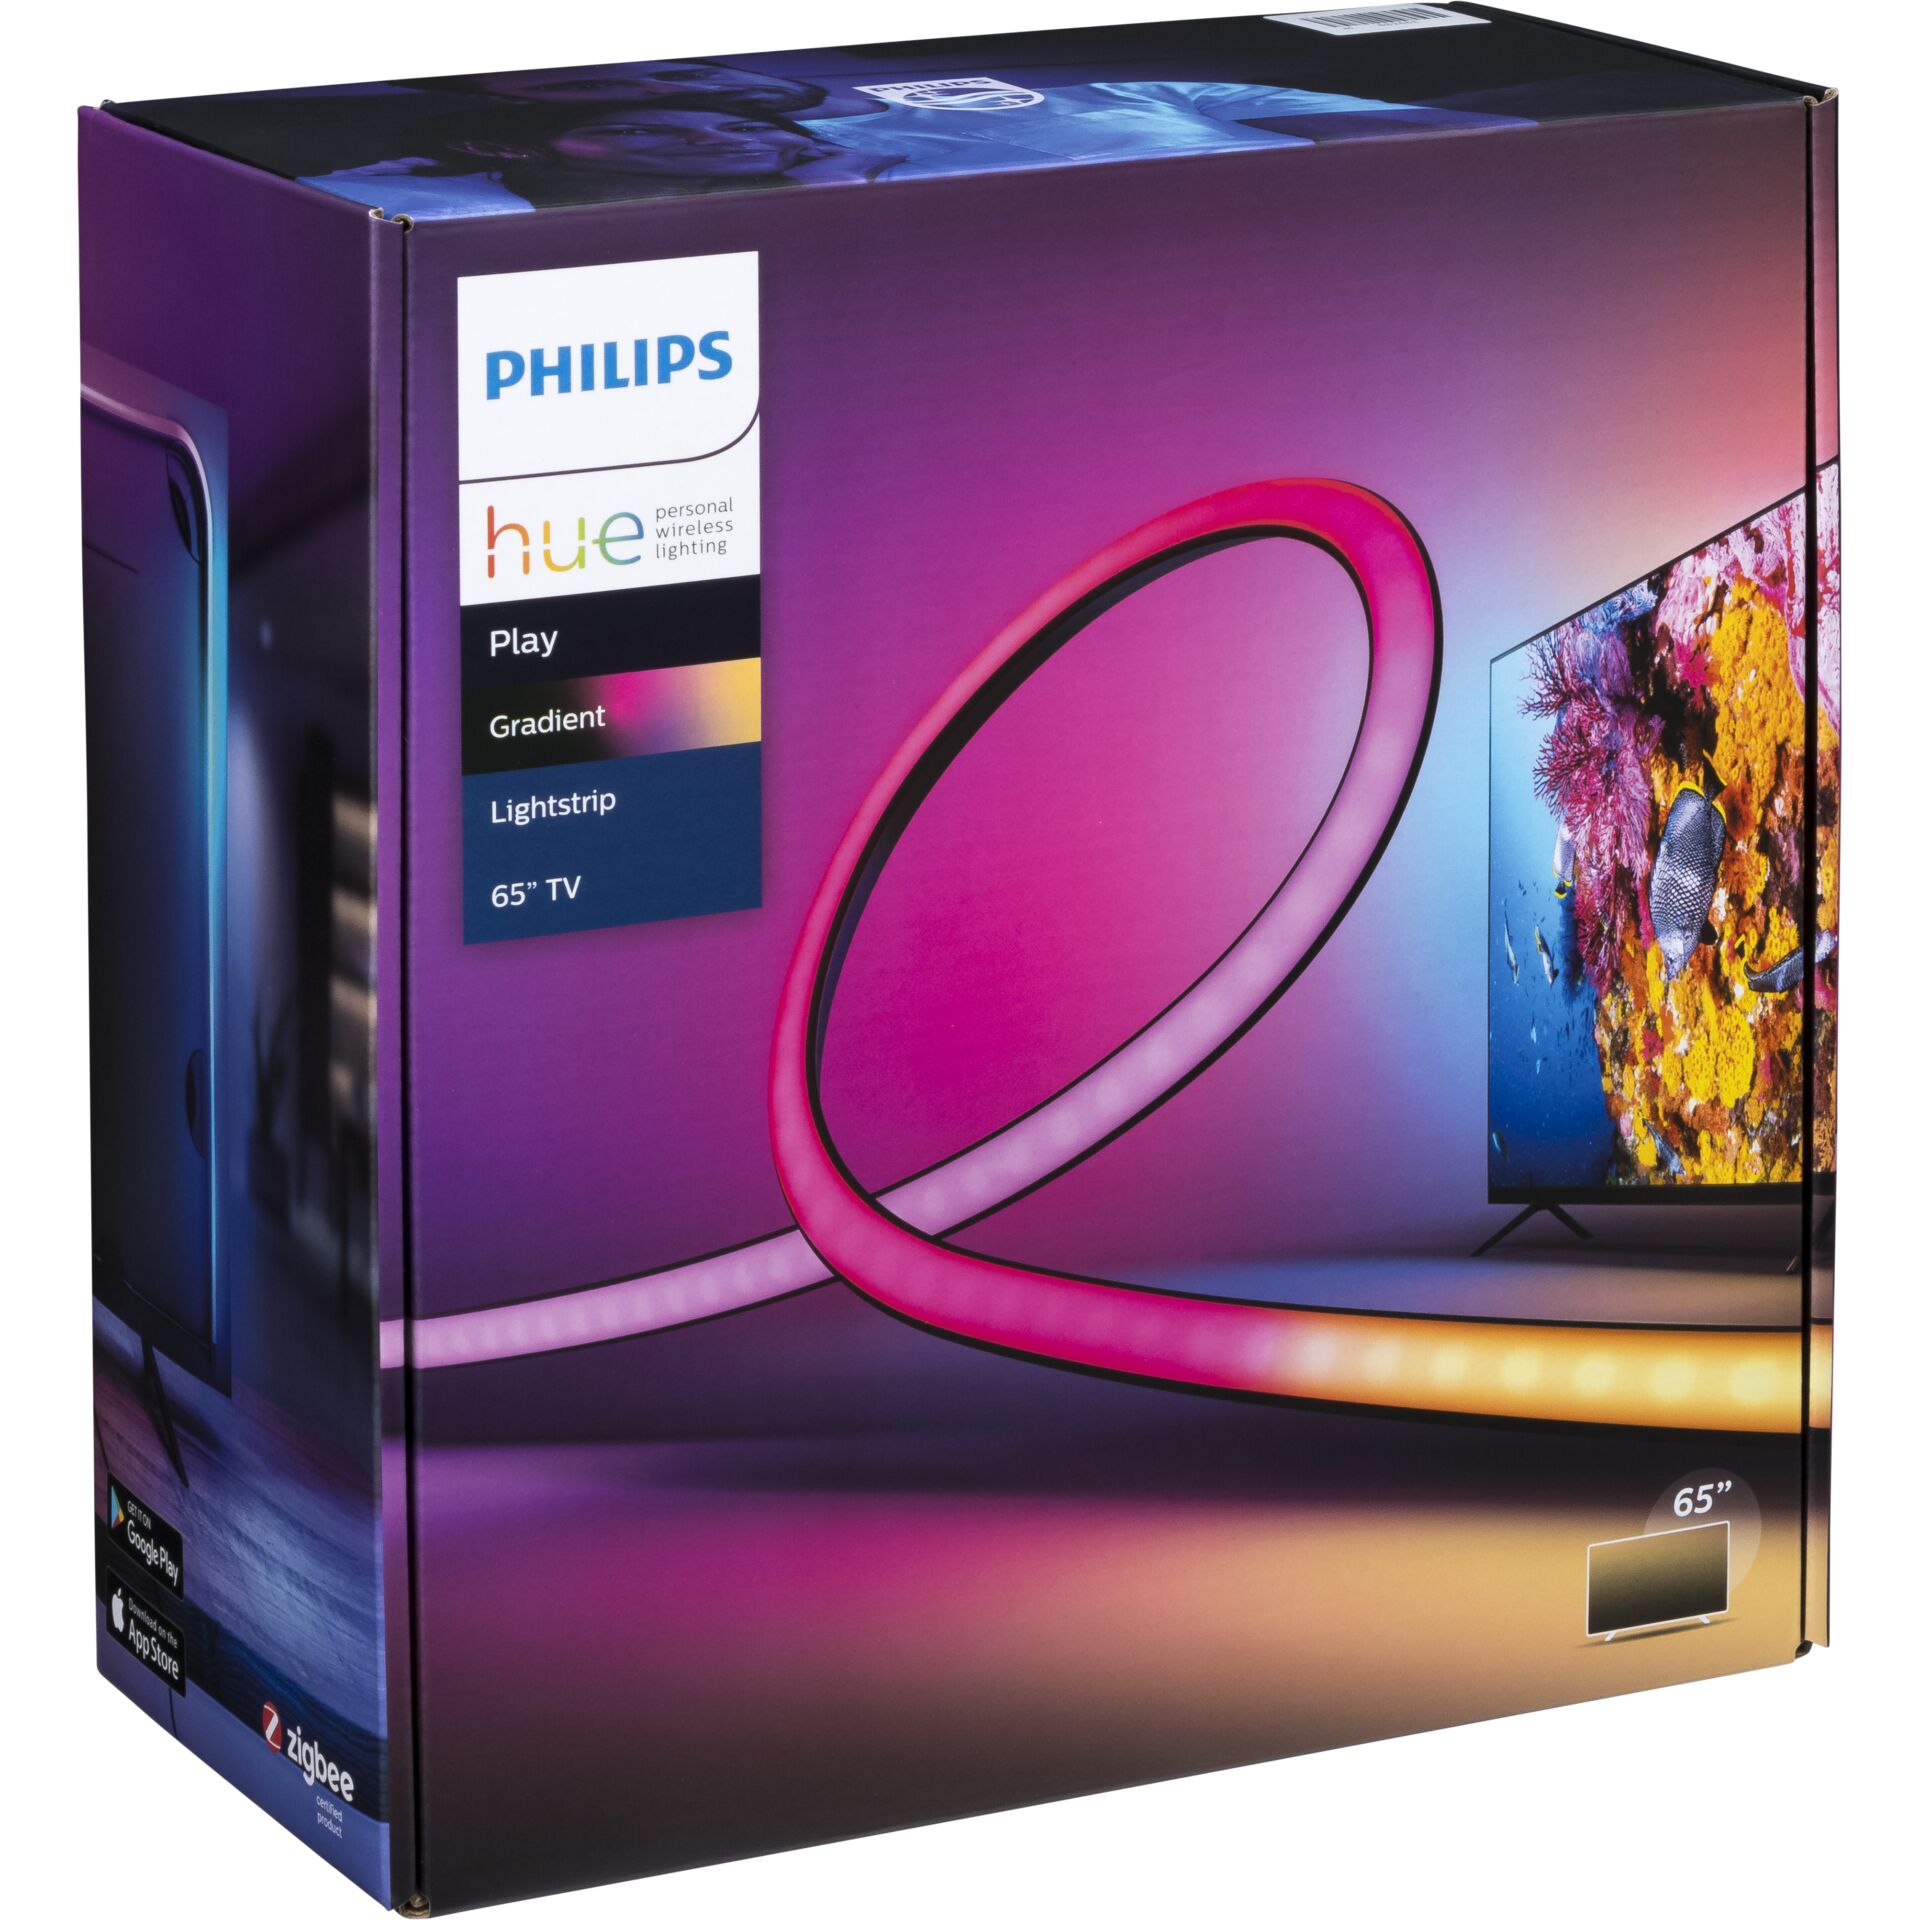 Philips Hue Play Gradient LED Lightstrip TV 65 Inch